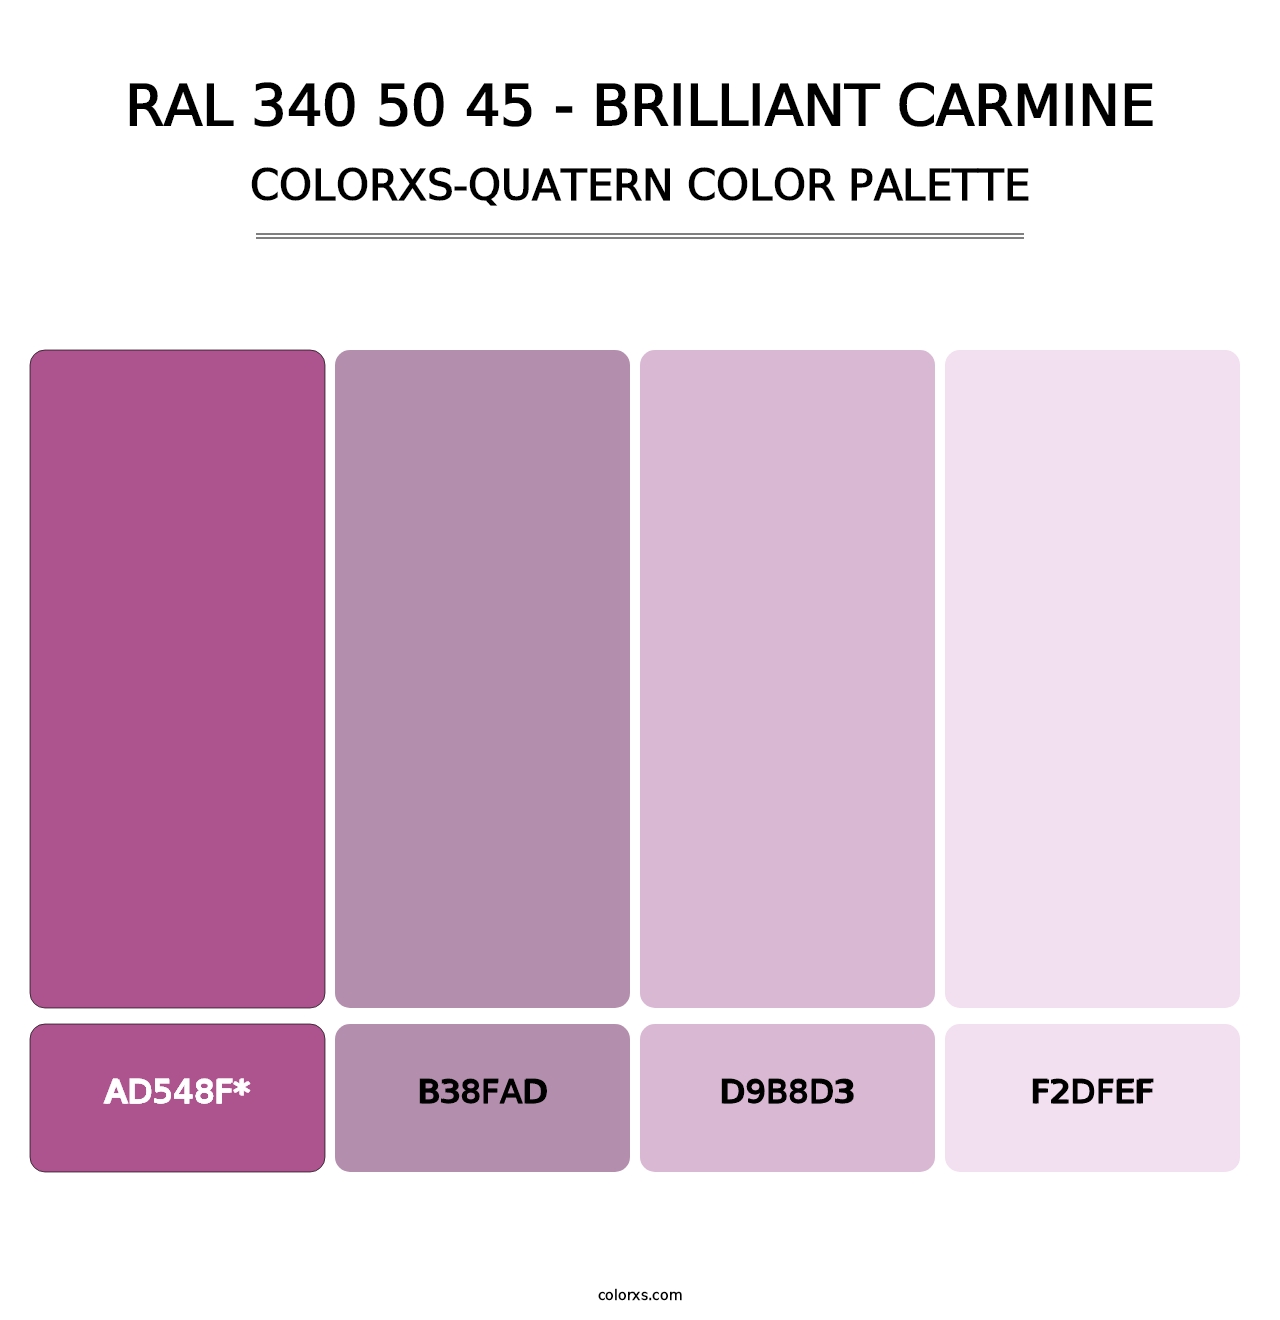 RAL 340 50 45 - Brilliant Carmine - Colorxs Quatern Palette